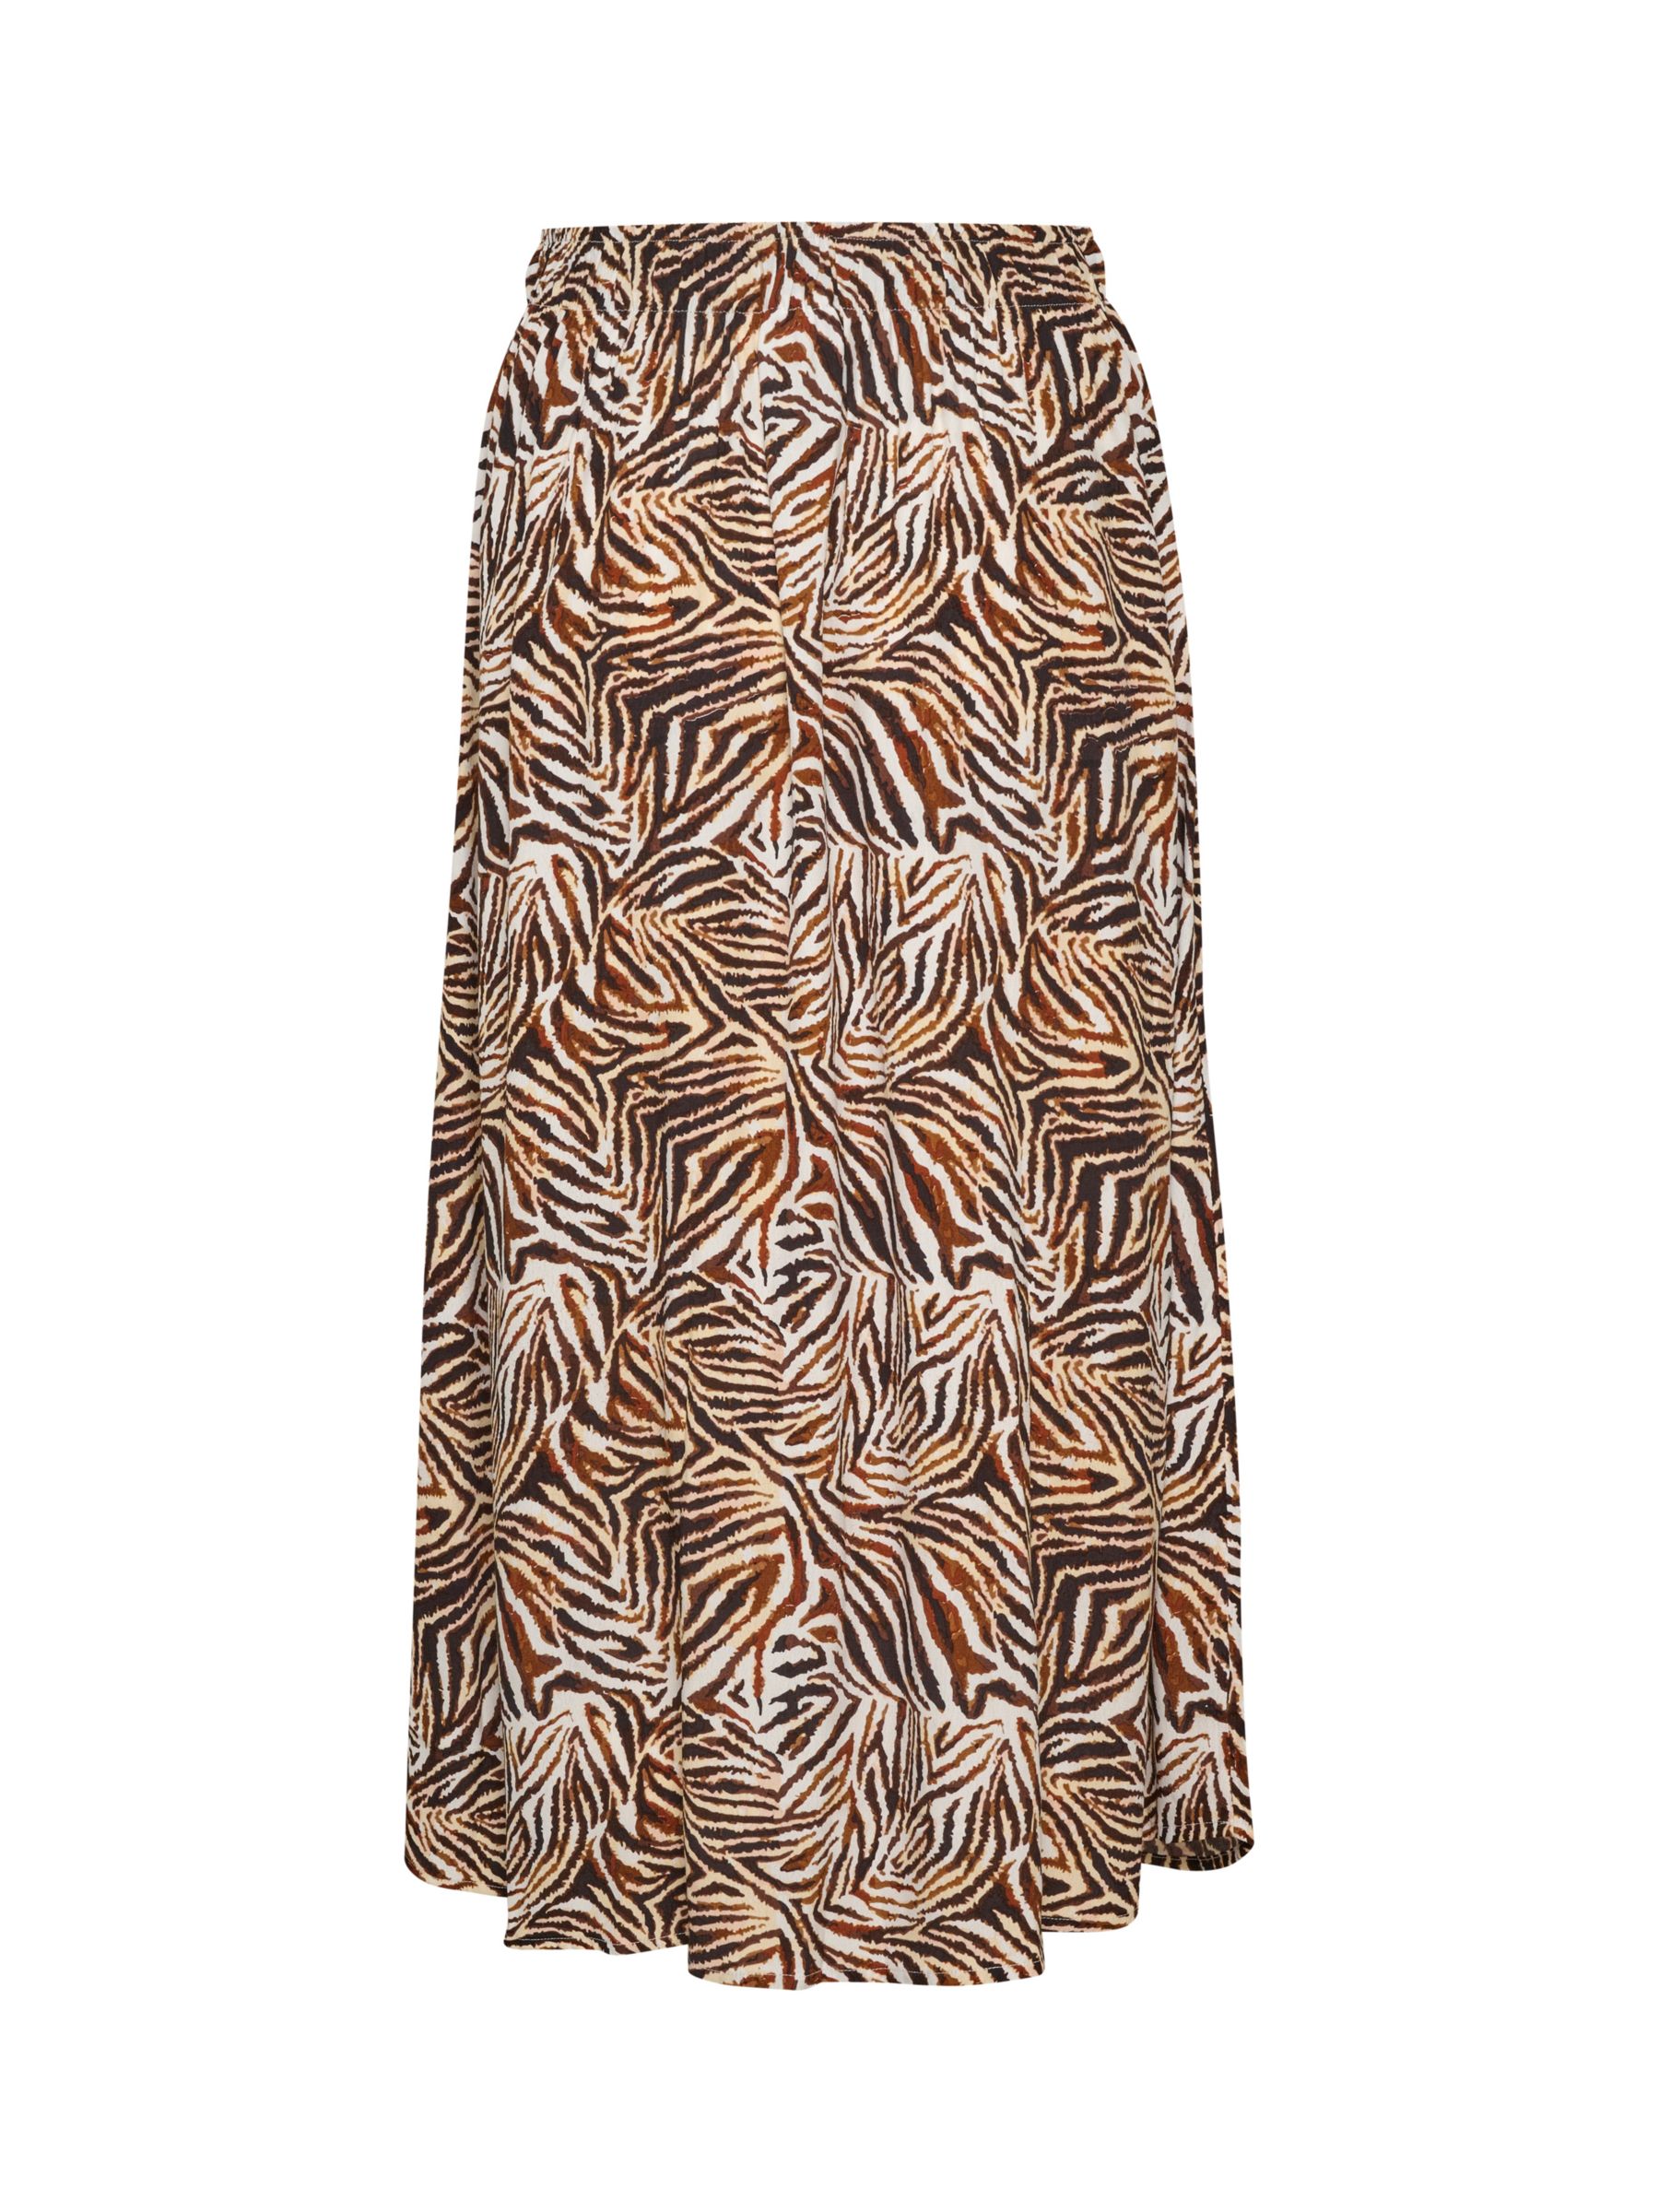 Buy Saint Tropez Tessa Zebra Print Midi Skirt, Hot Fudge/Multi Online at johnlewis.com